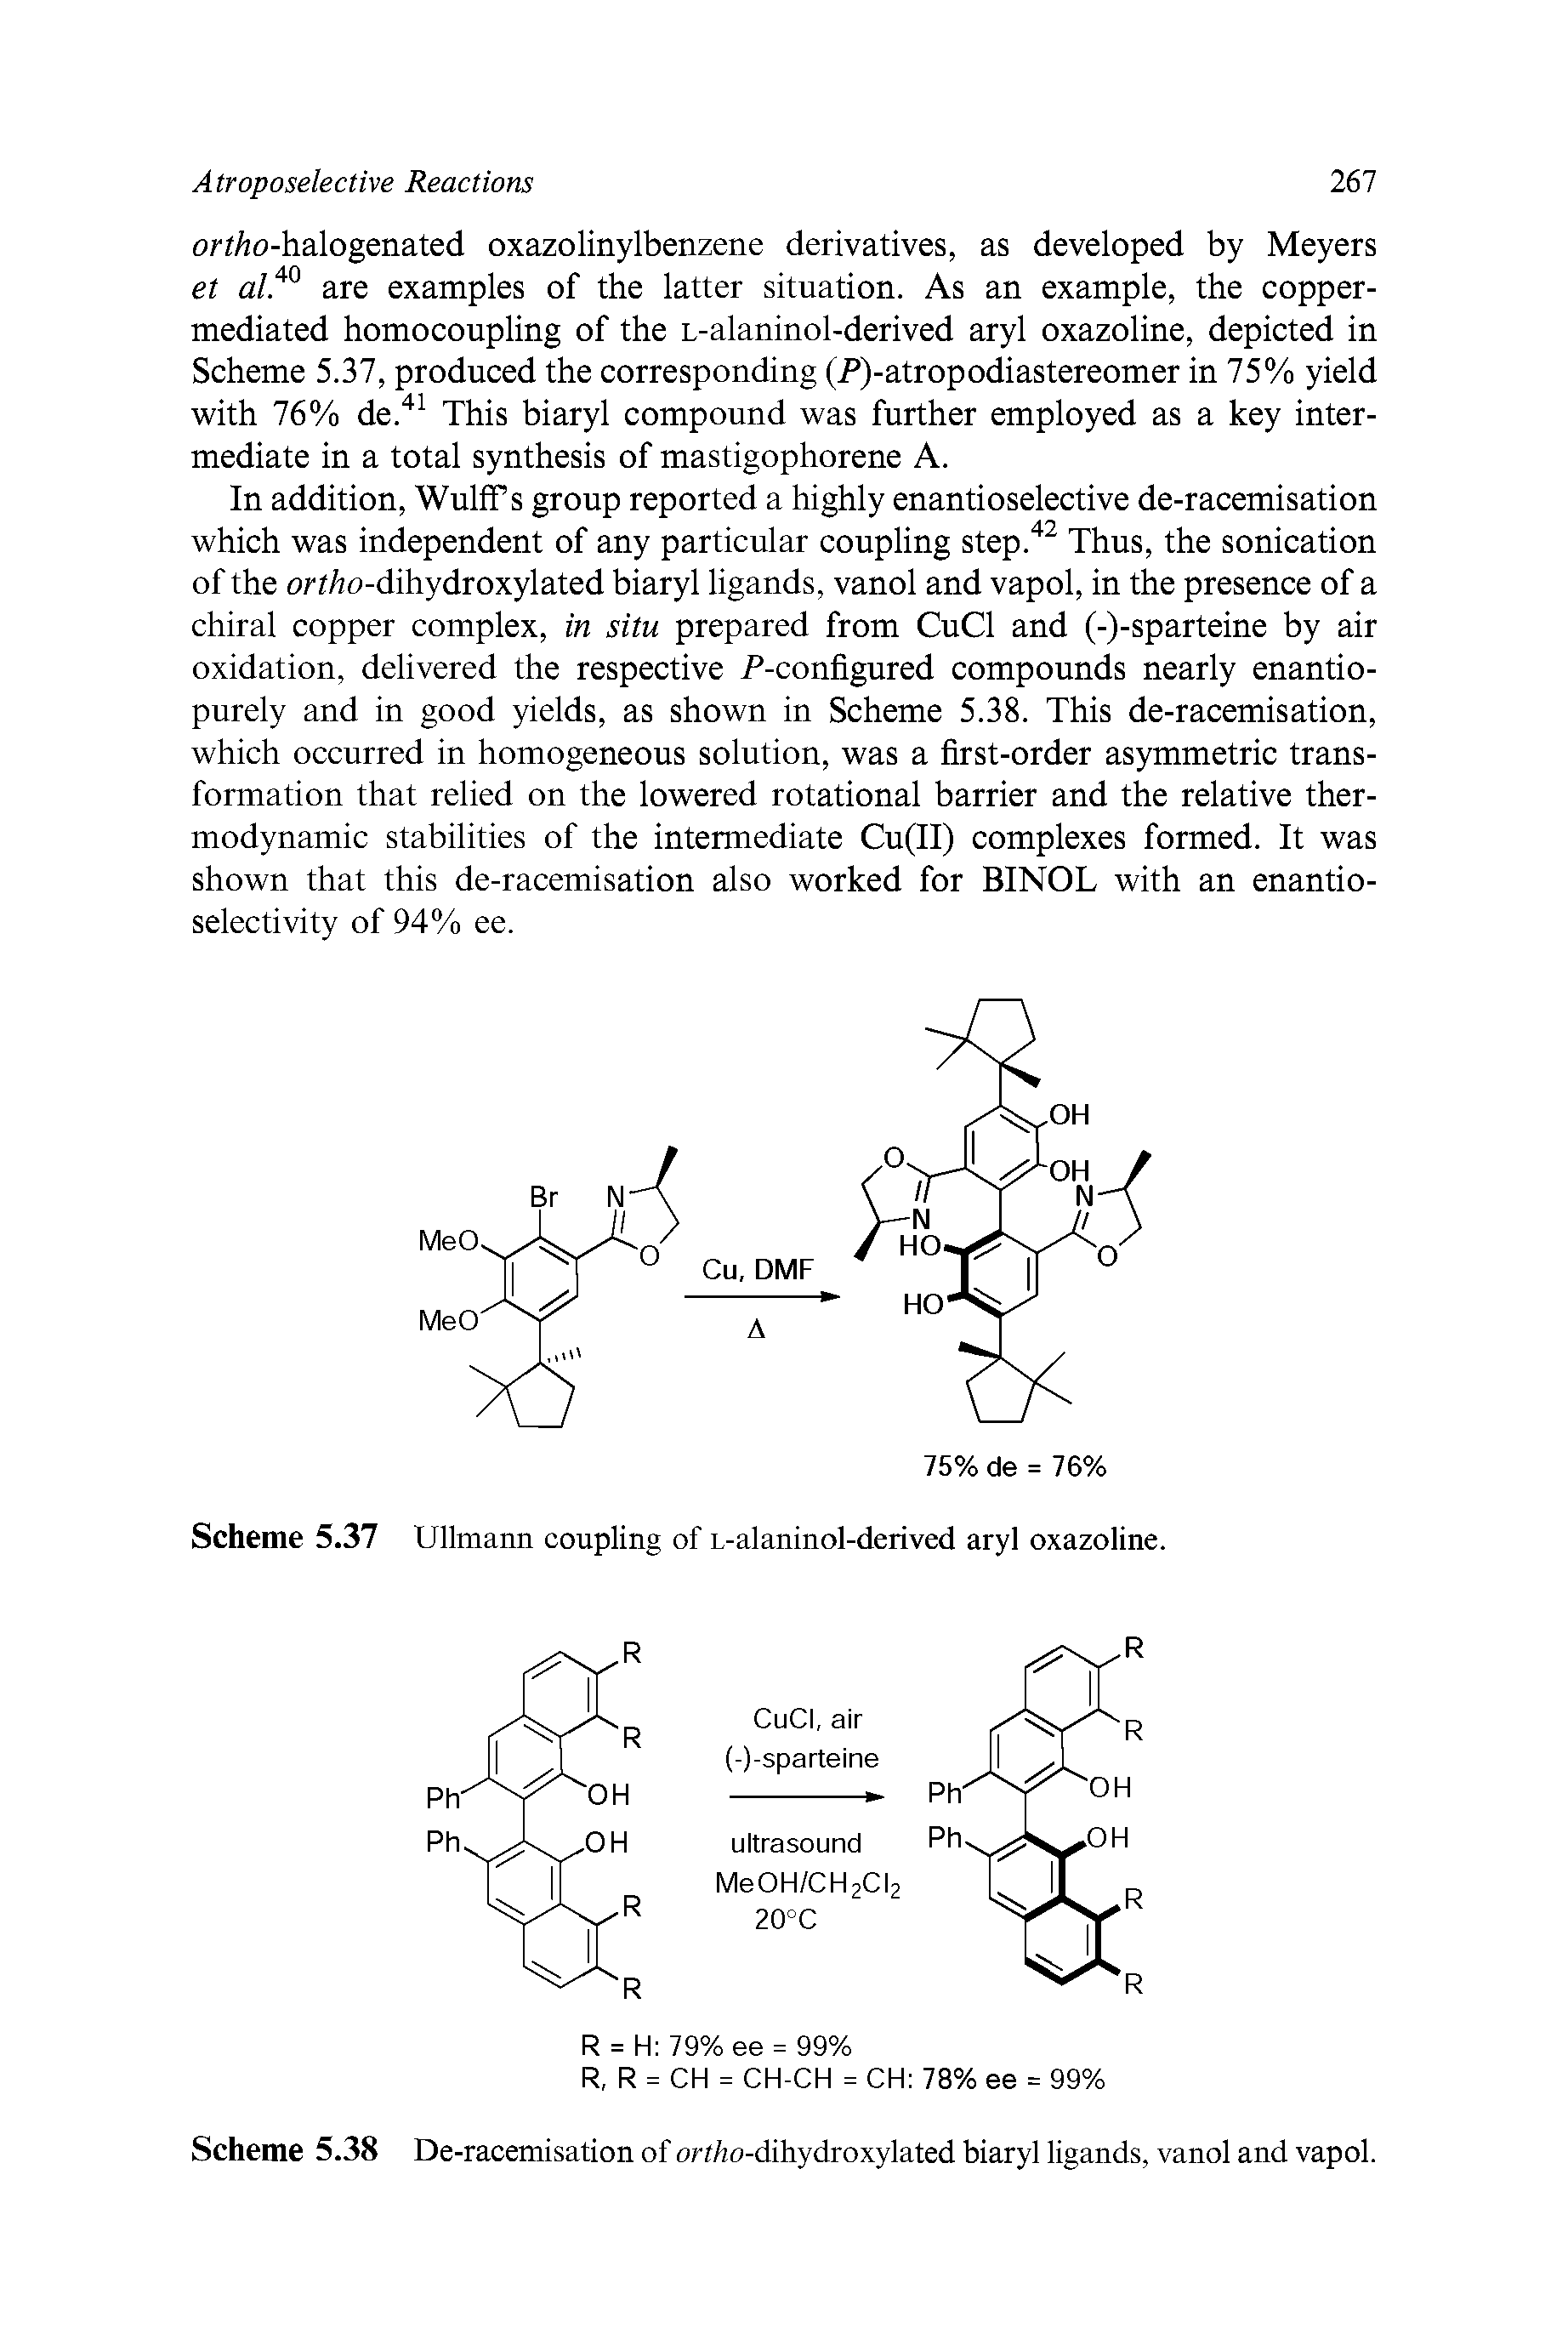 Scheme 5.38 De-racemisation of ori/io-dihydroxylated biaryl ligands, vanol and vapol.